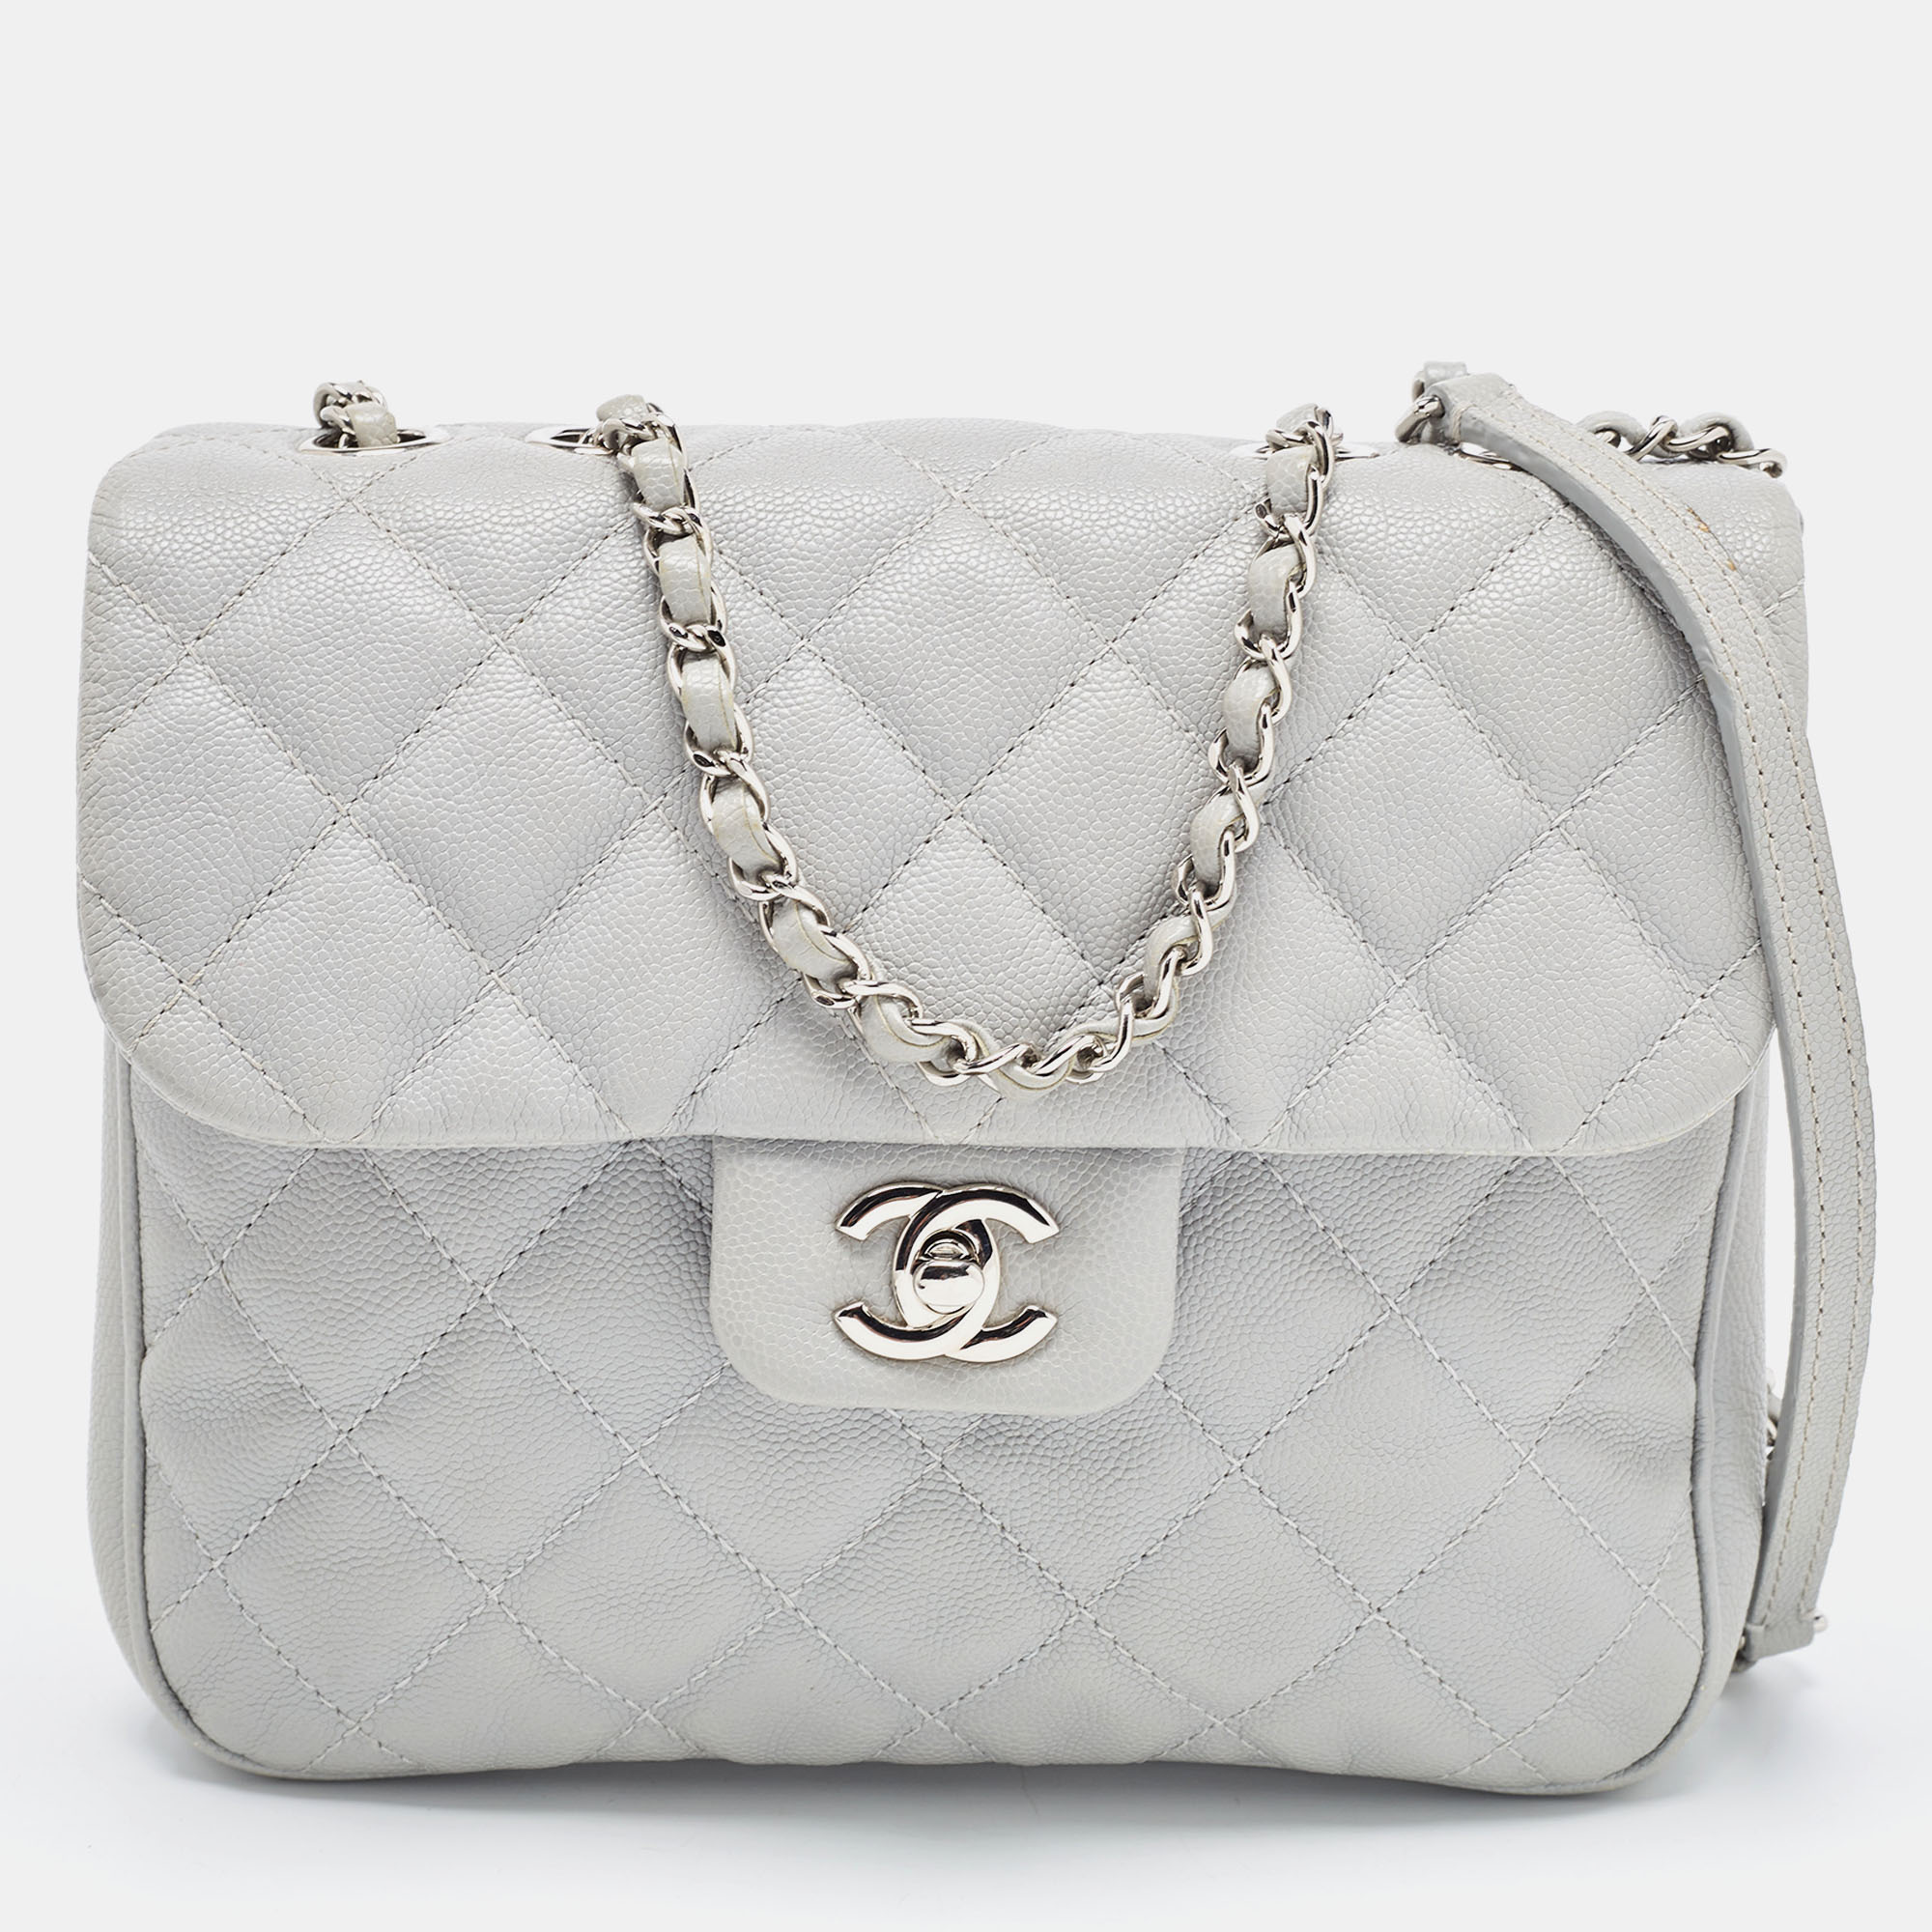 Chanel grey caviar leather medium urban companion flap bag